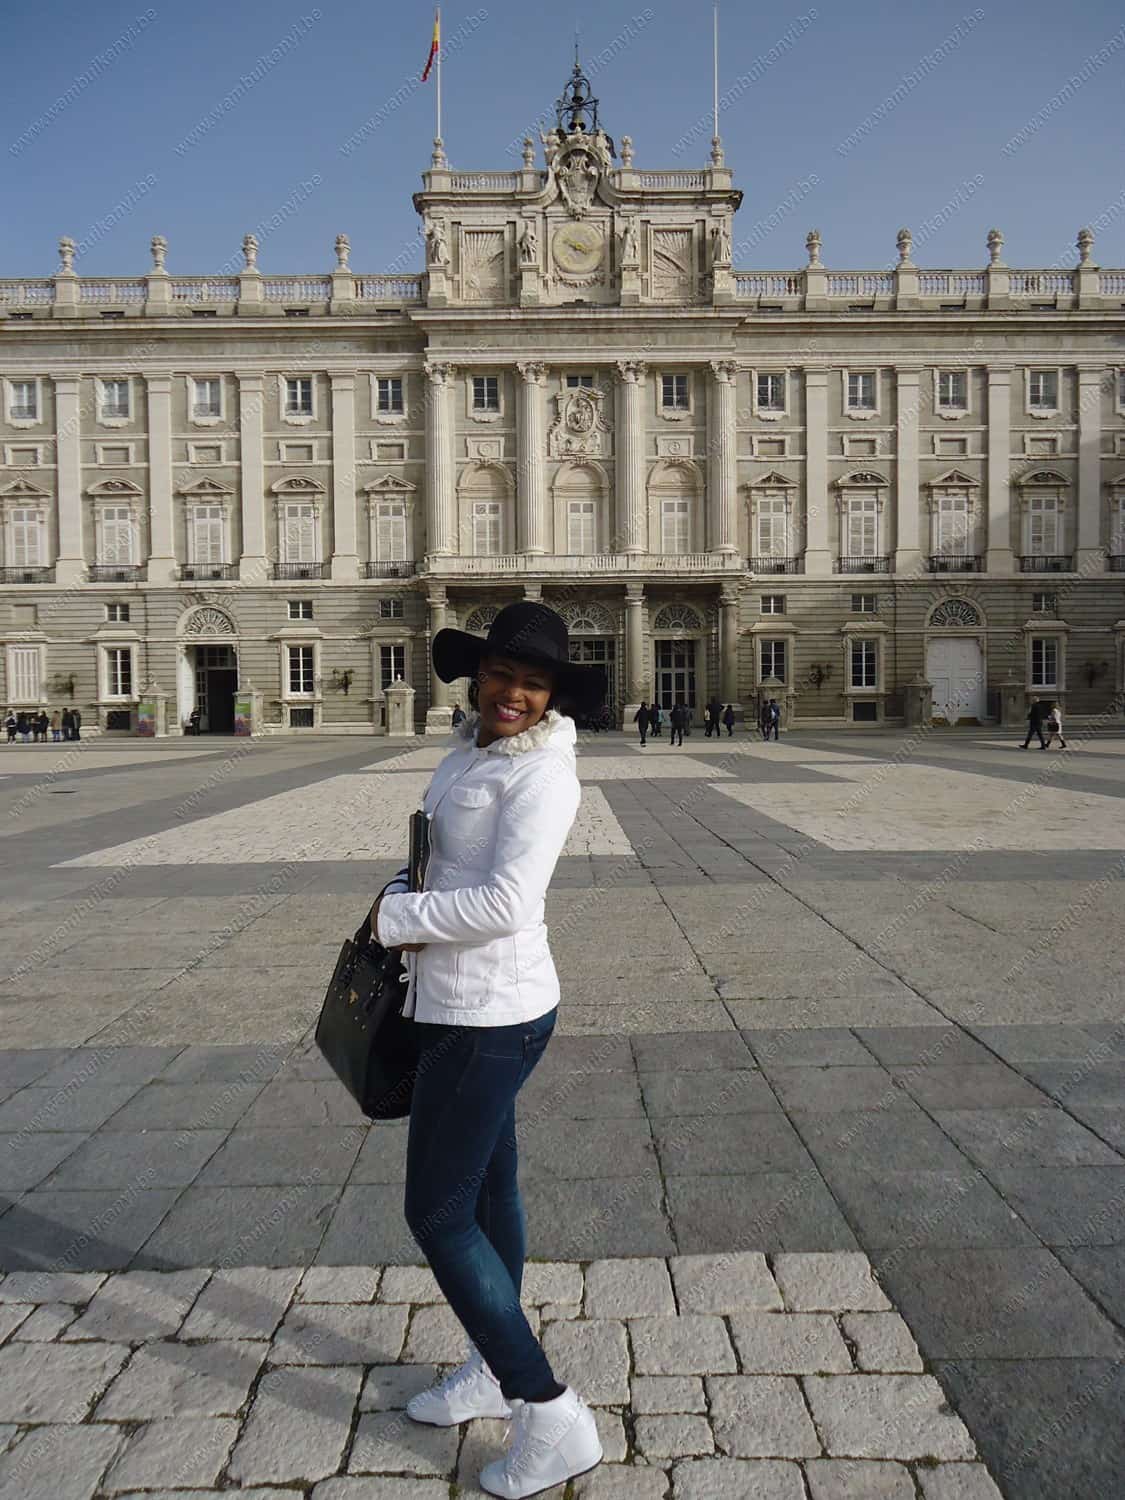 The Royal Palace of Madrid